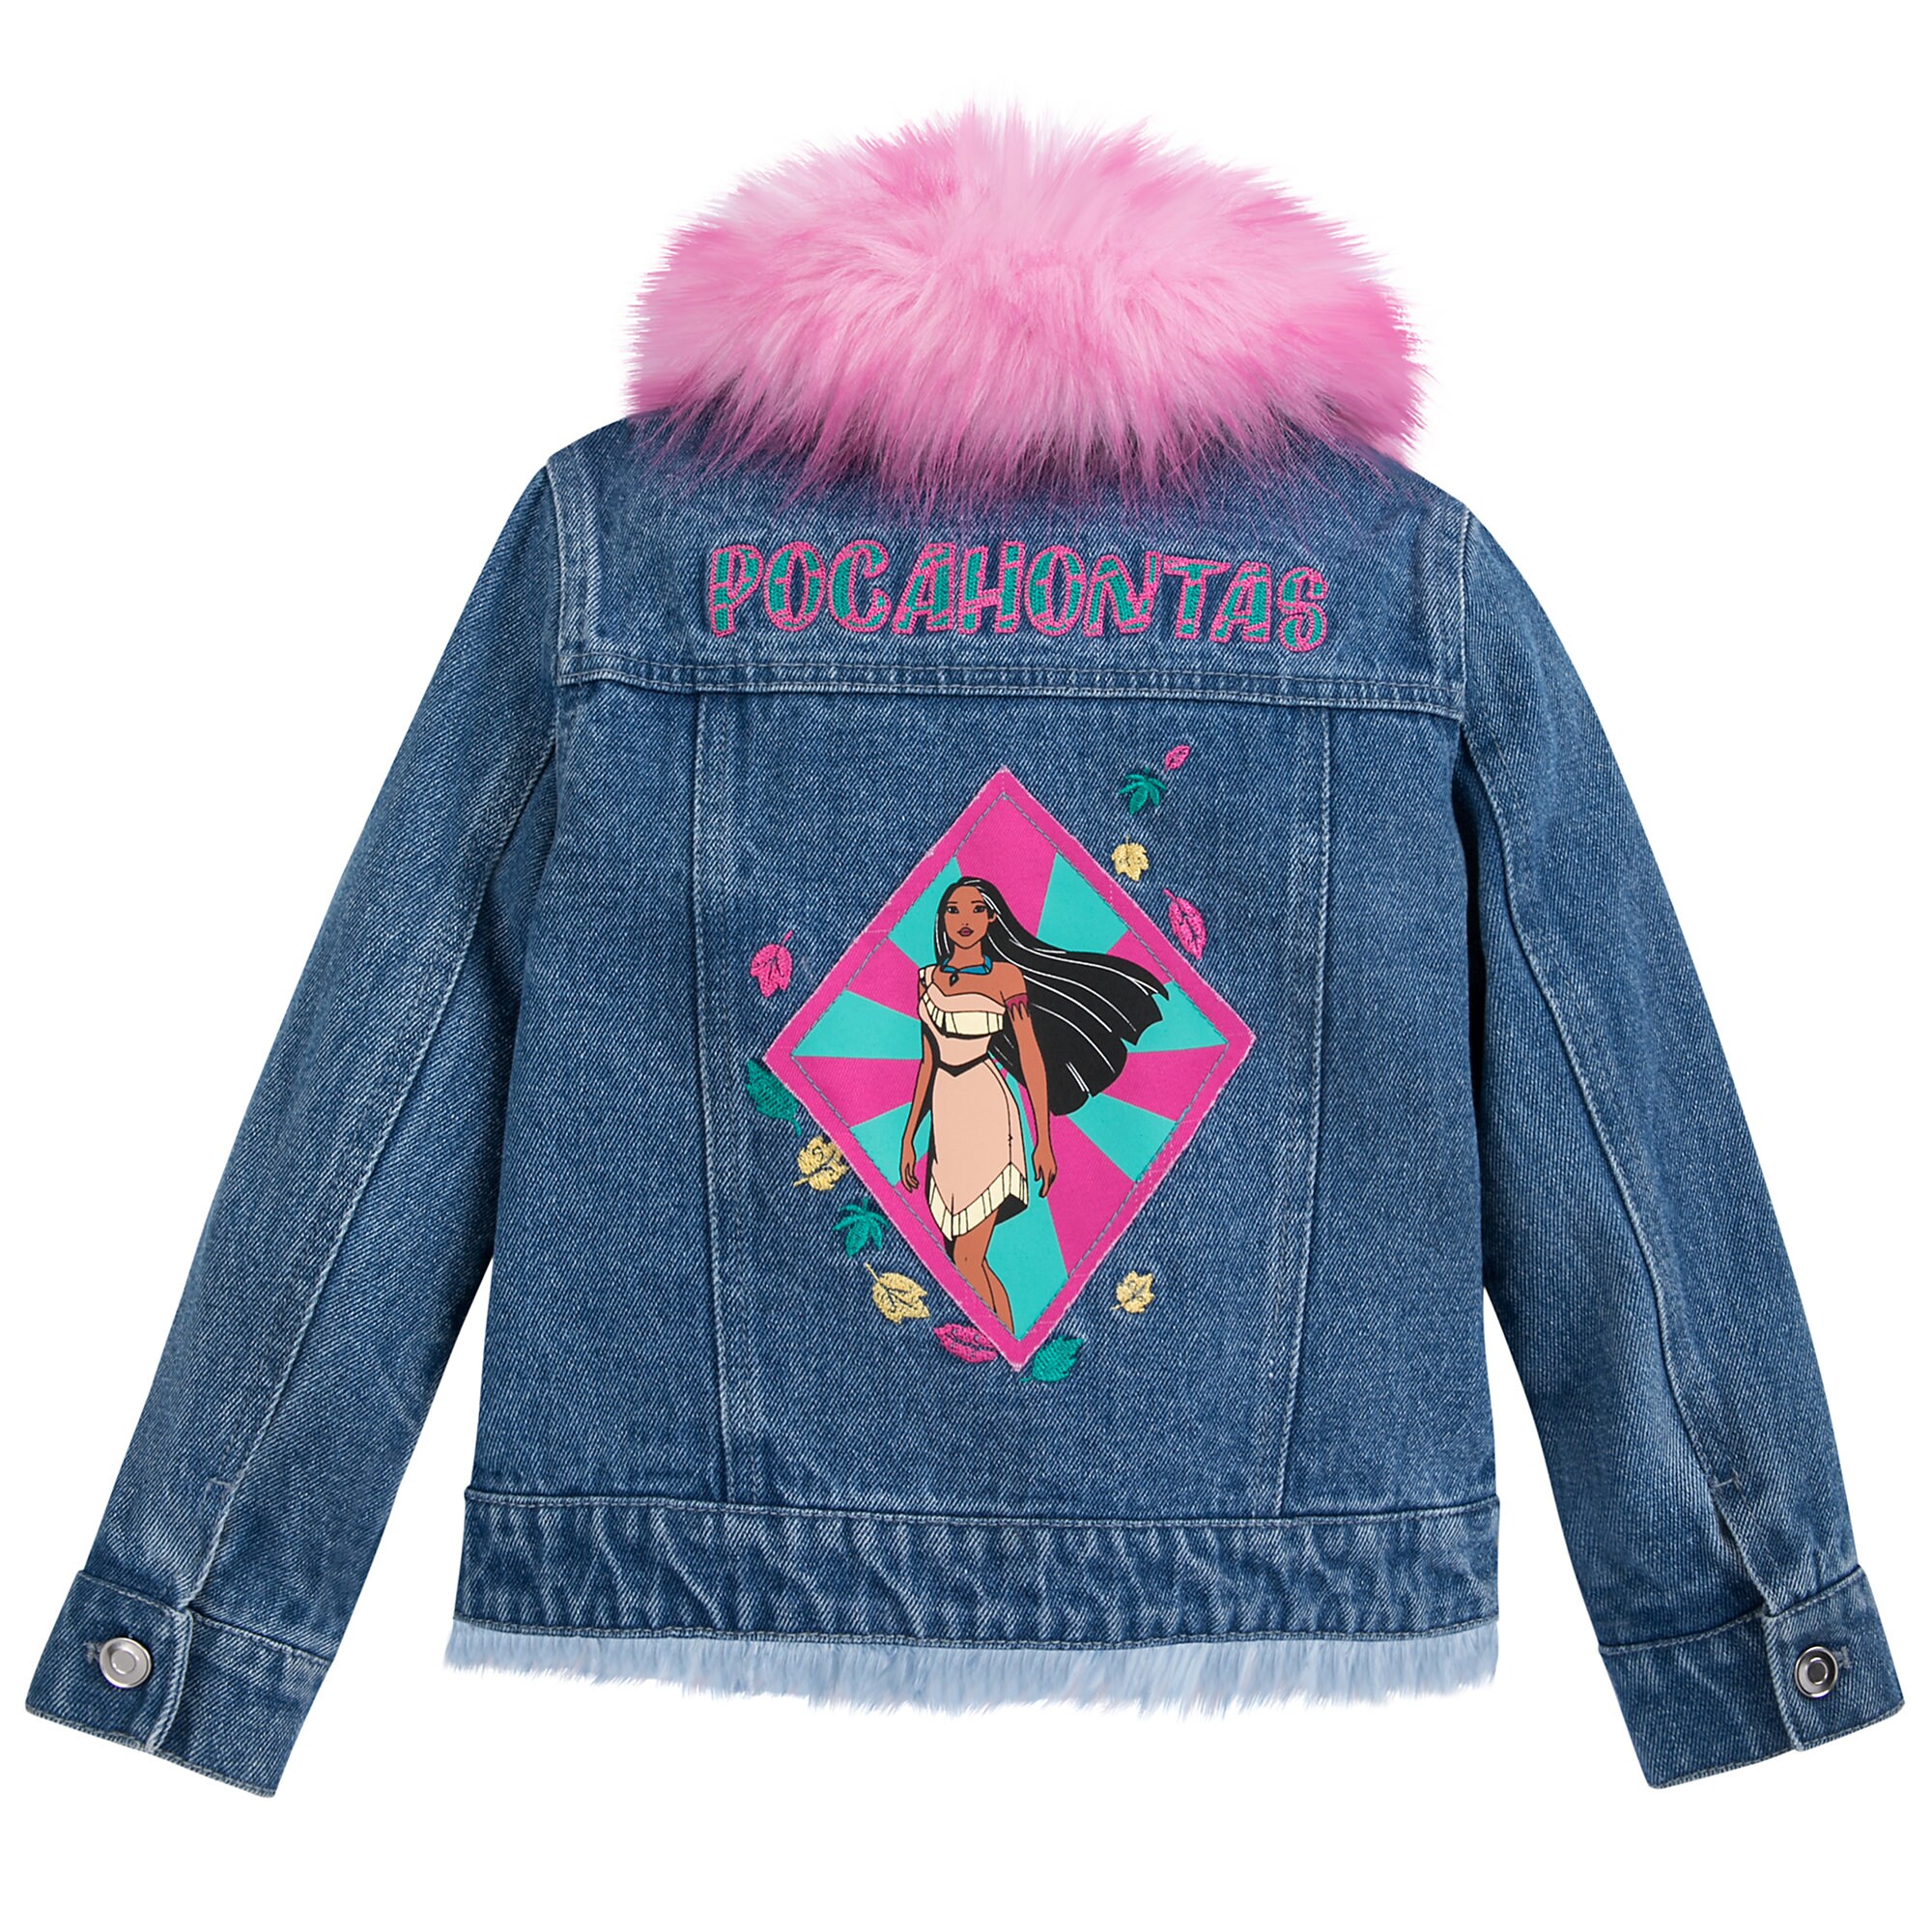 Pocahontas Denim Jacket for Girls